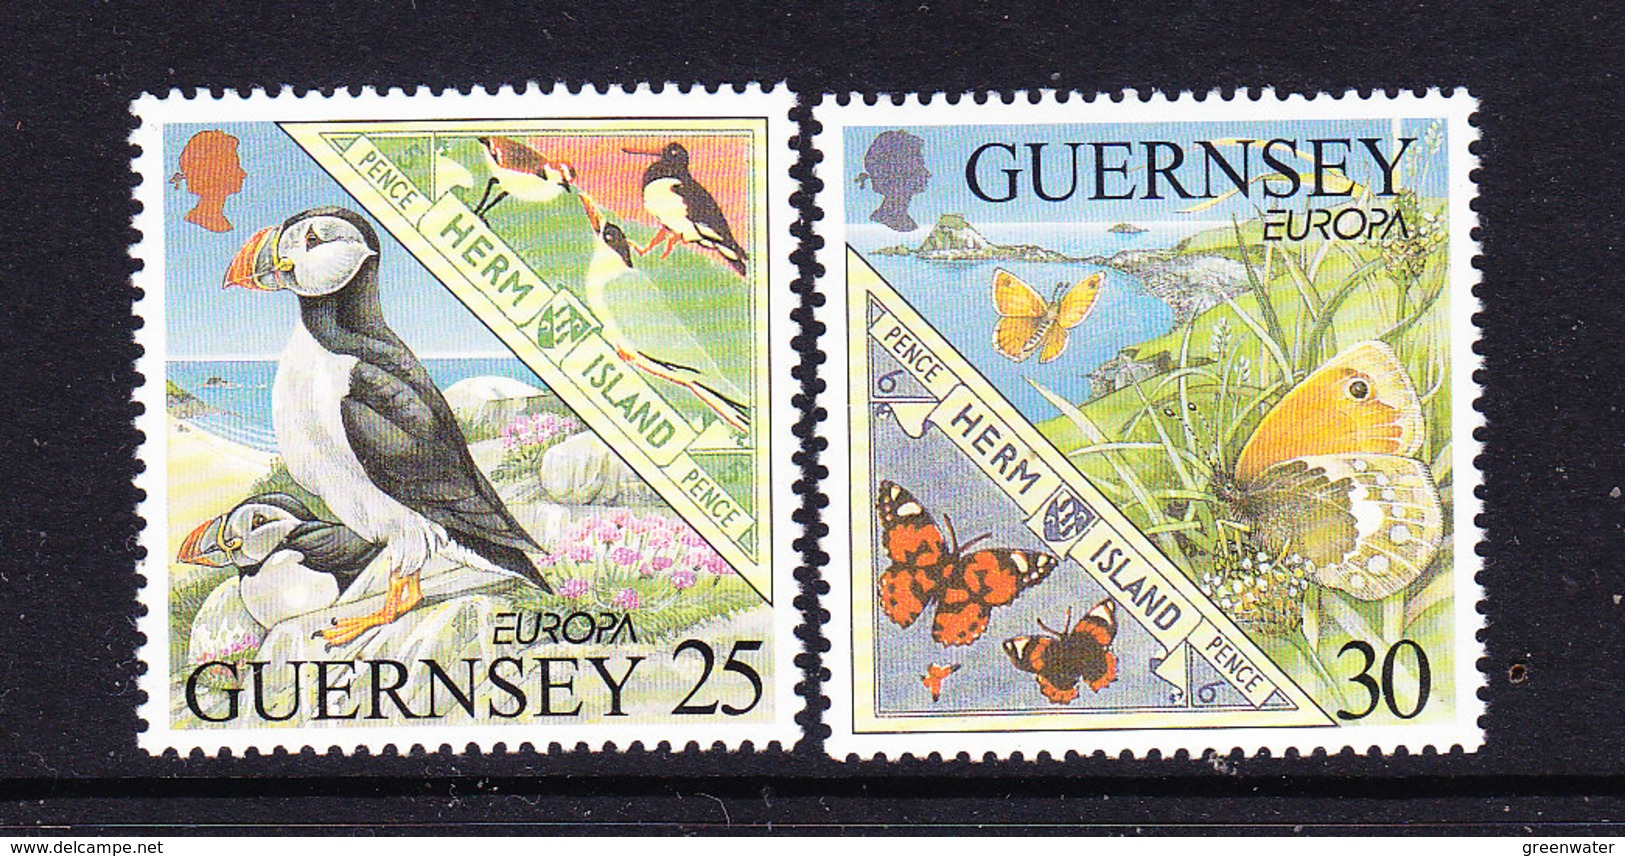 Europa Cept 1999 Guernsey 2v ** Mnh (38726S) - 1999